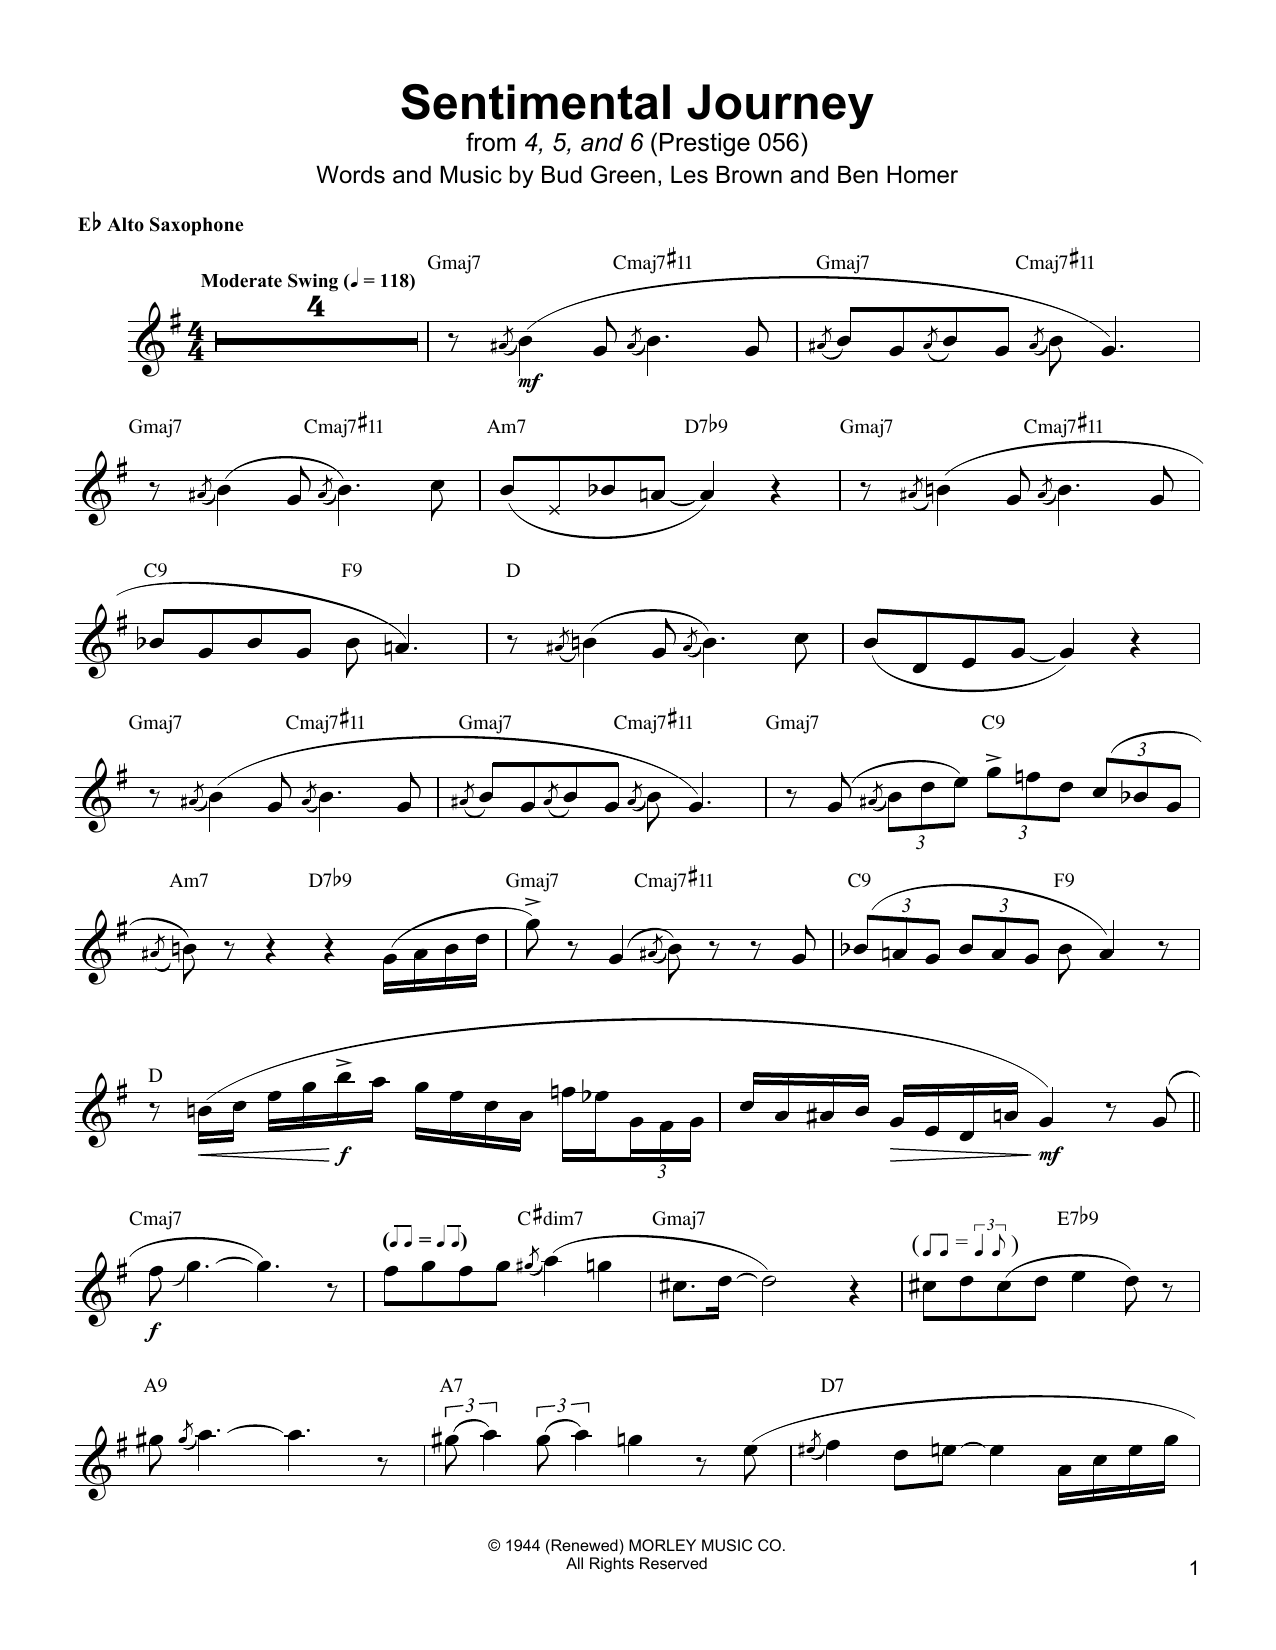 Jackie McLean Sentimental Journey Sheet Music Notes & Chords for Alto Sax Transcription - Download or Print PDF